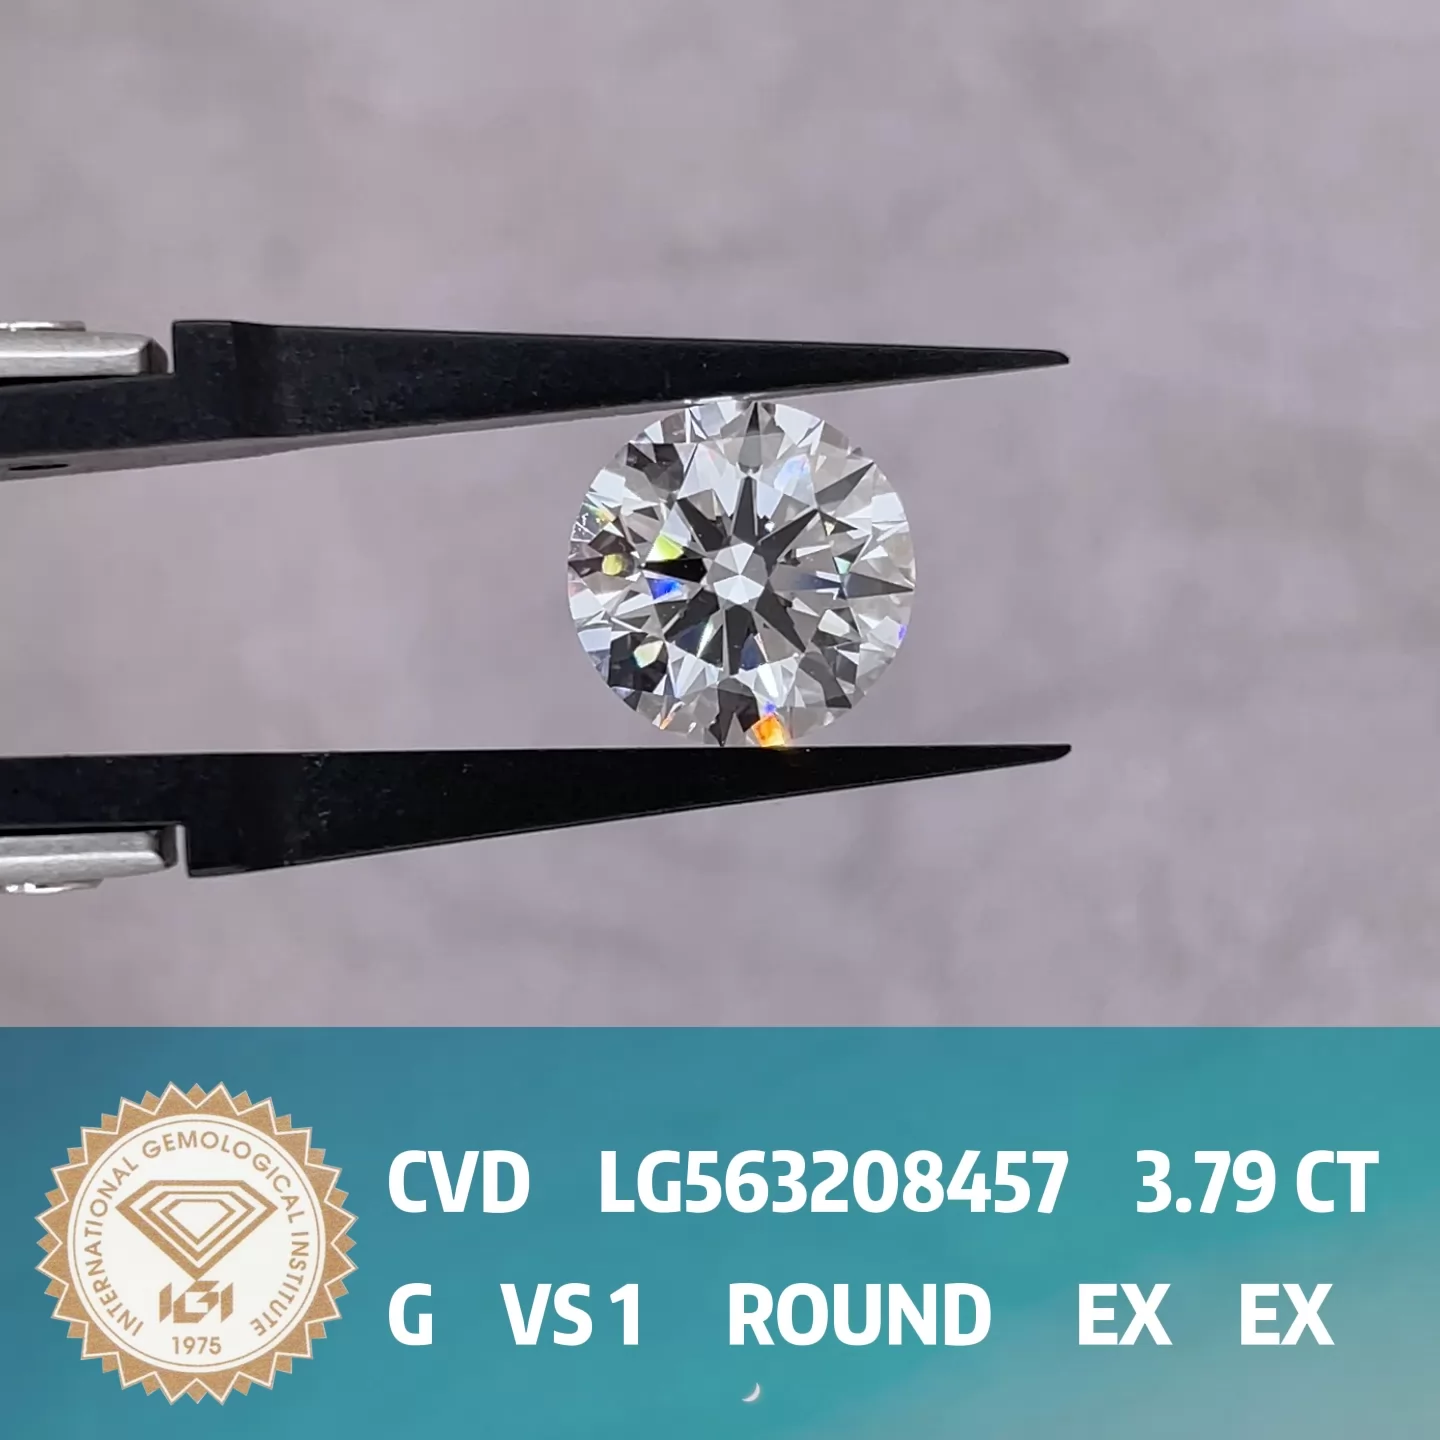 Round Brilliant Cut 3.79ct G Color CVD Lab Grown Diamond